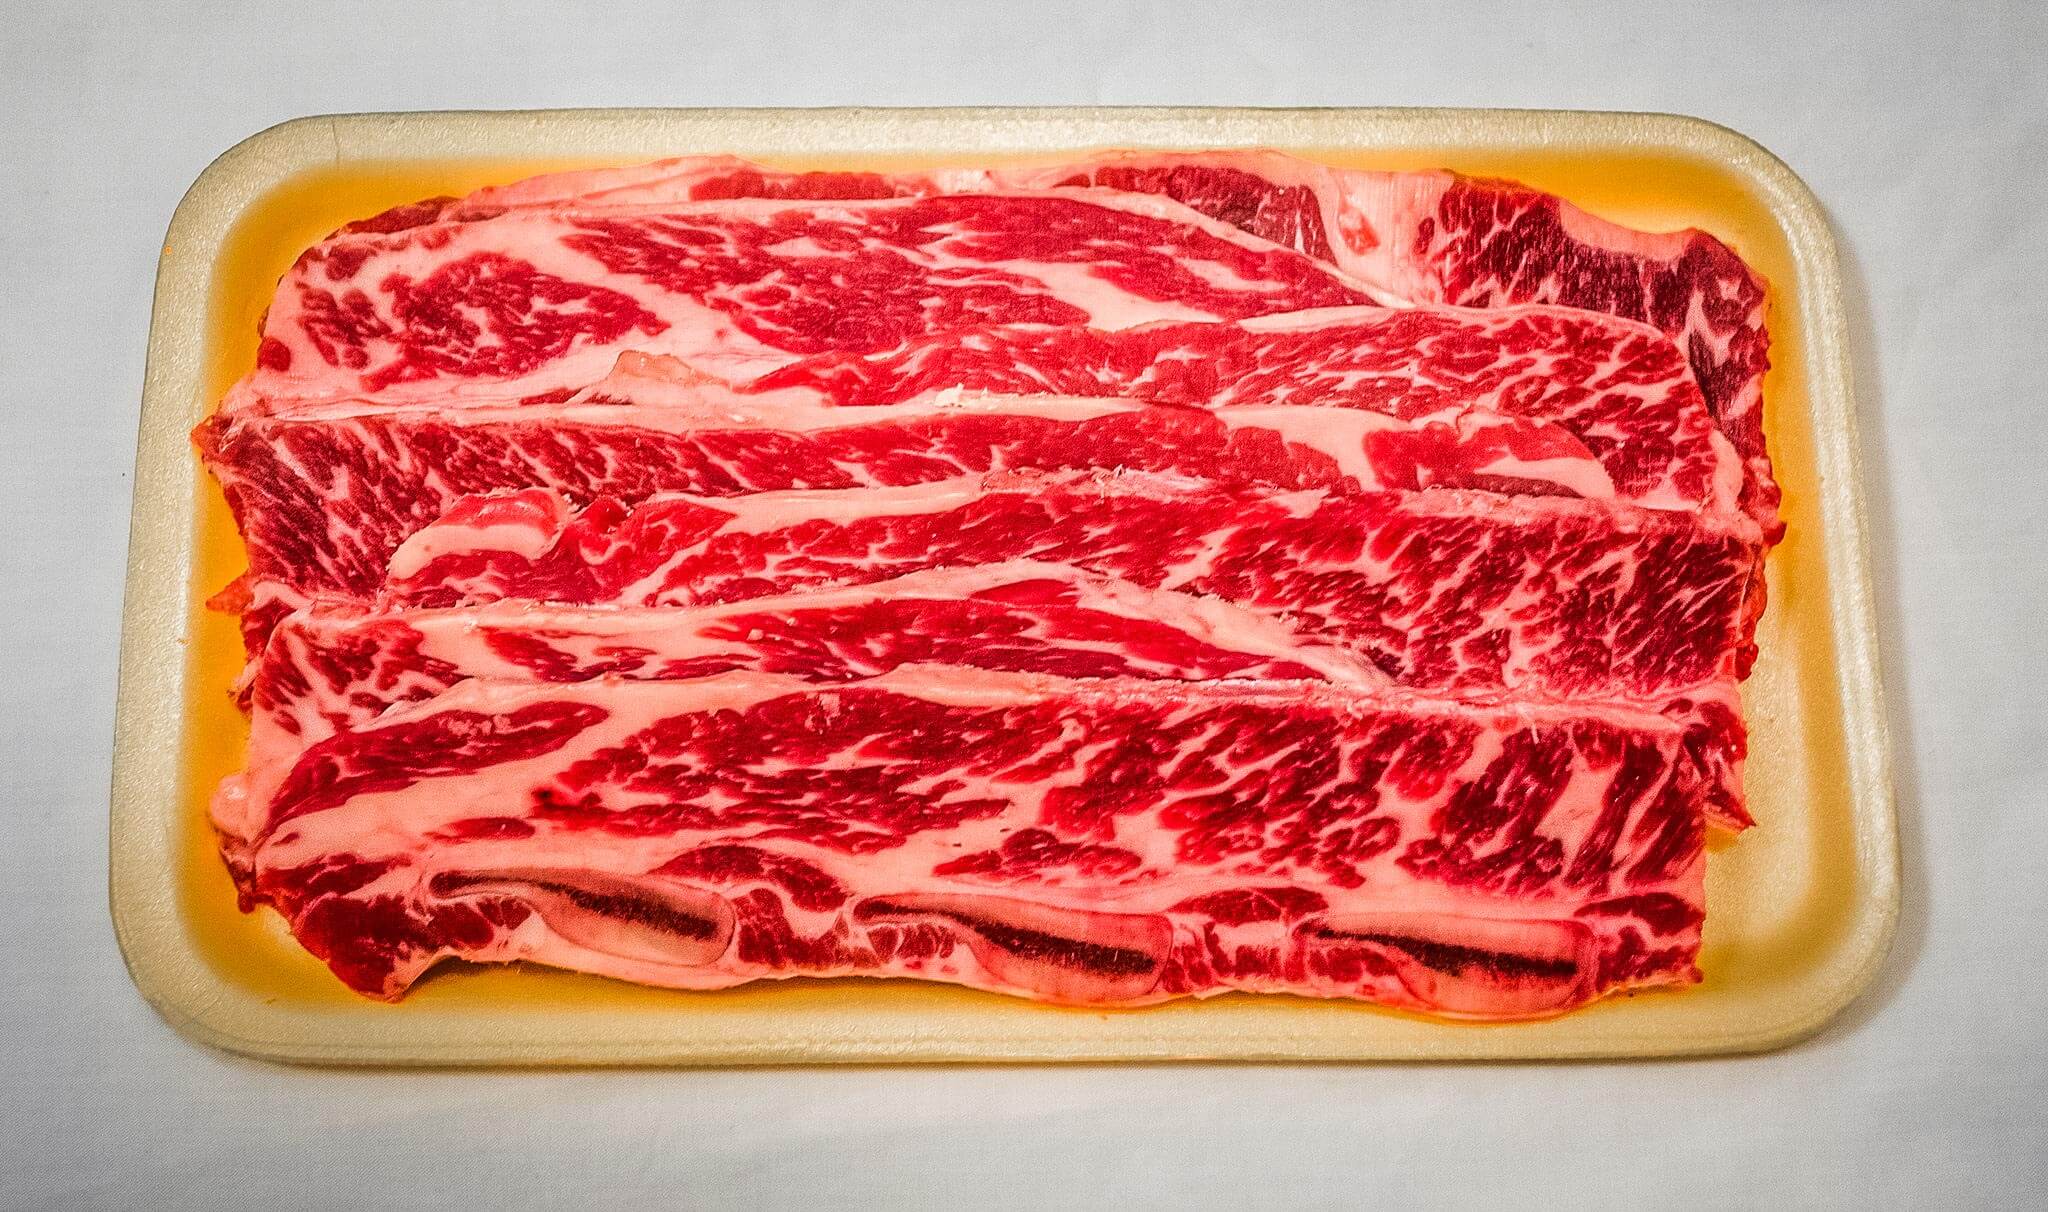 Korean-style beef short ribs